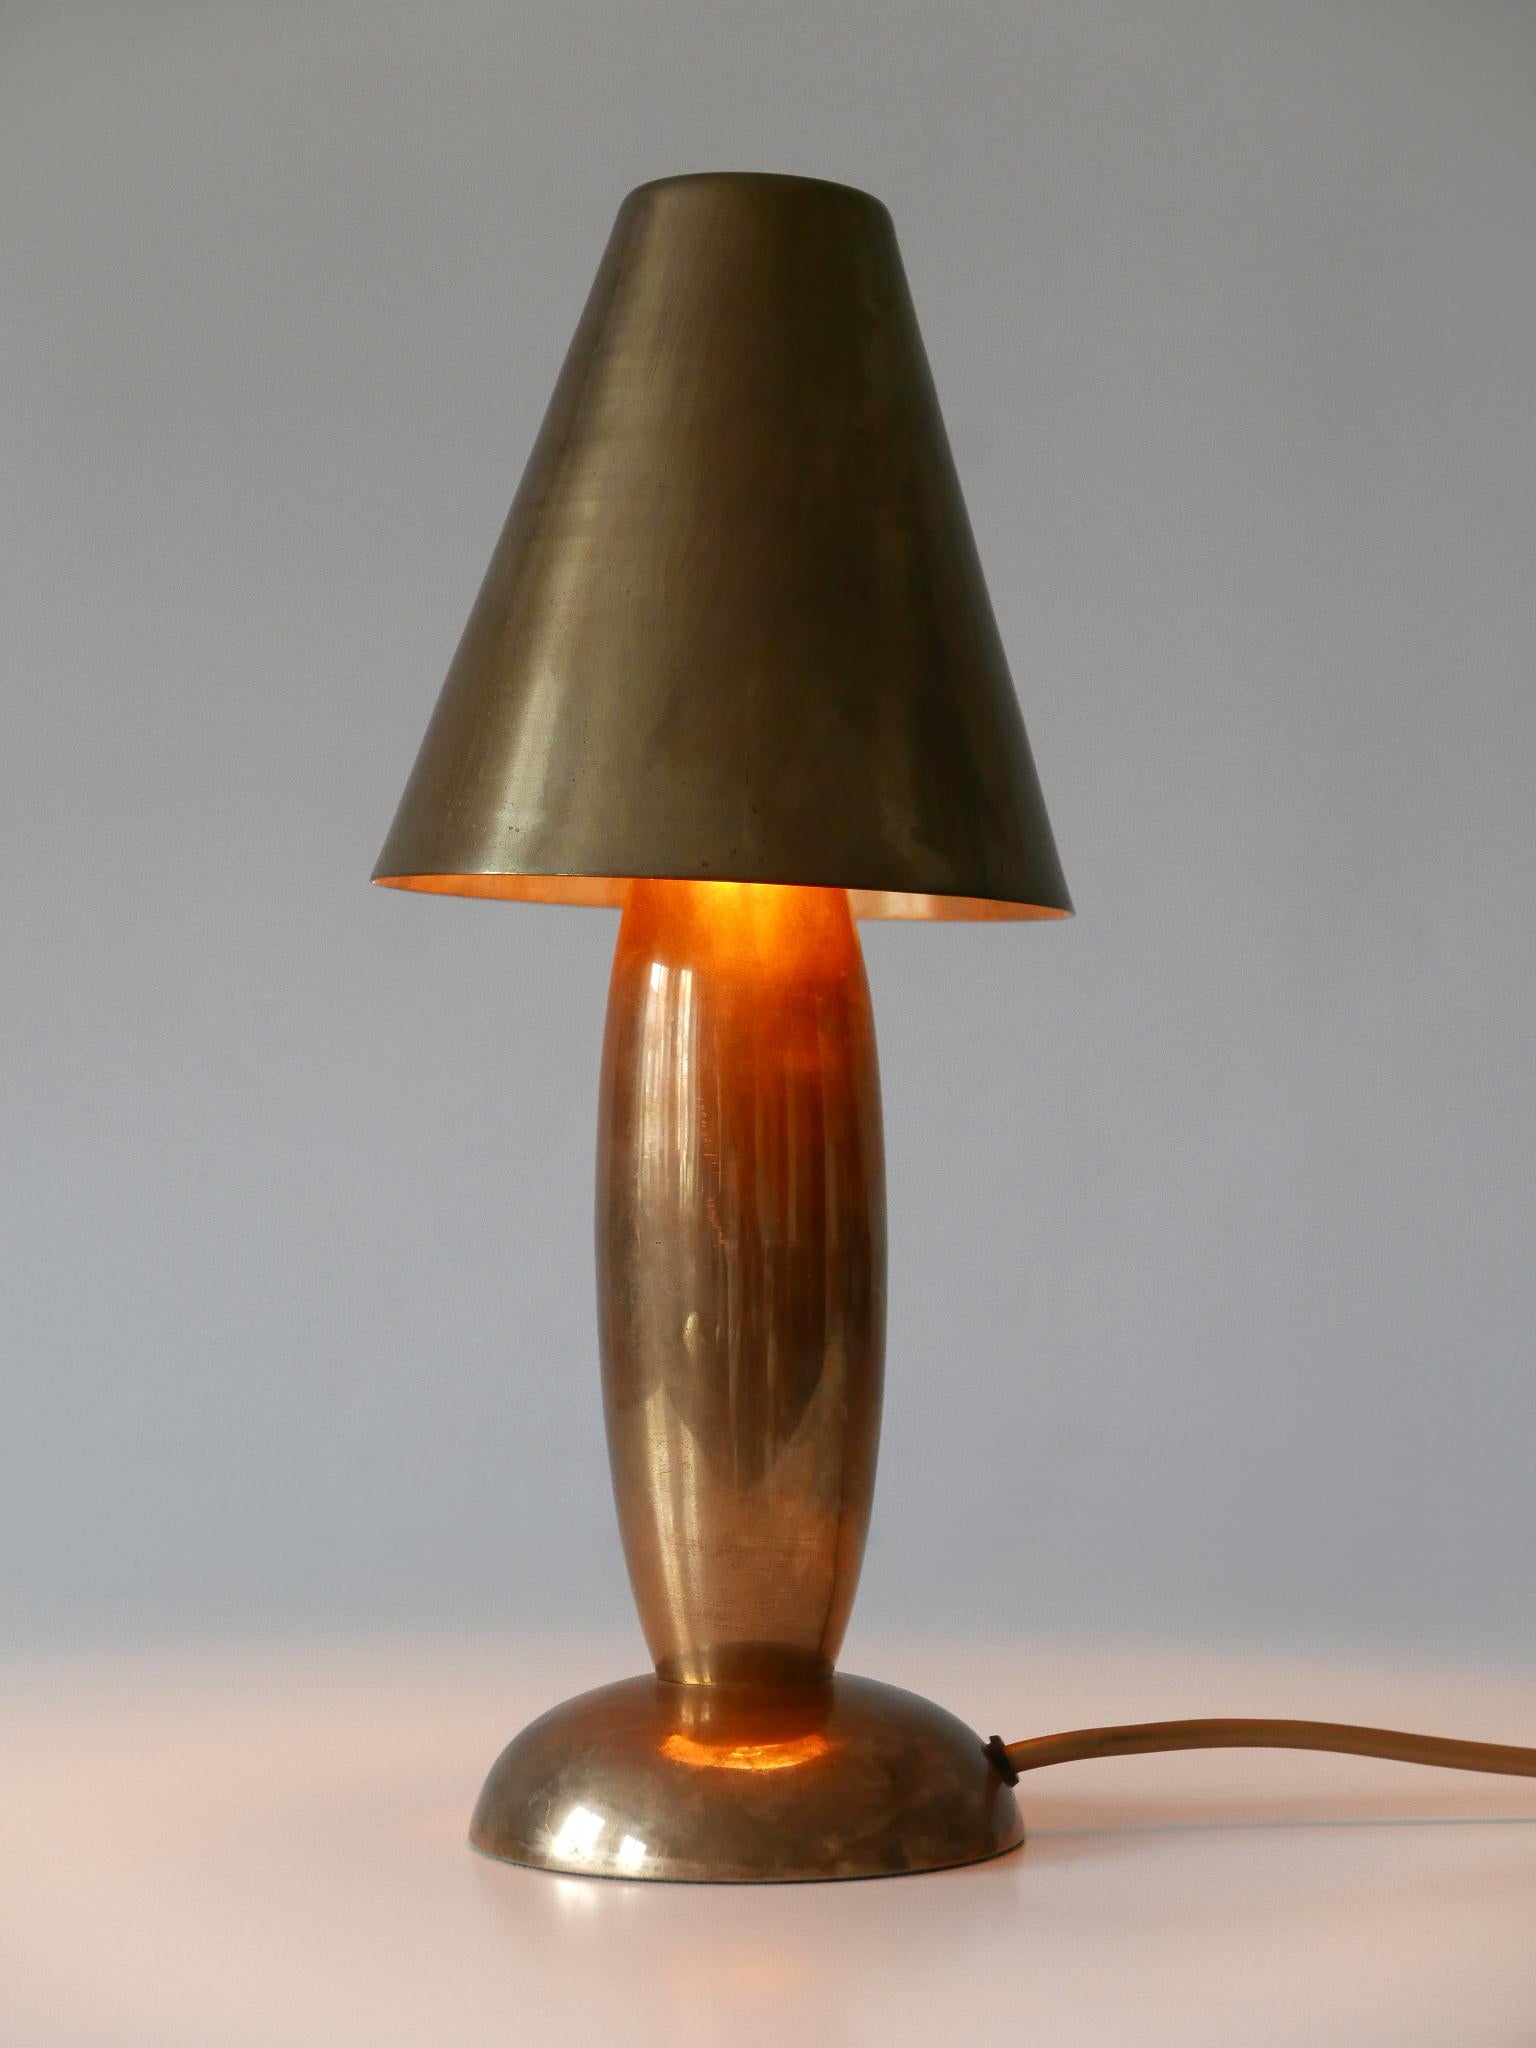 Rare & Lovely Mid-Century Modern Brass Side Table Lamp by Lambert Germany 1970s 3